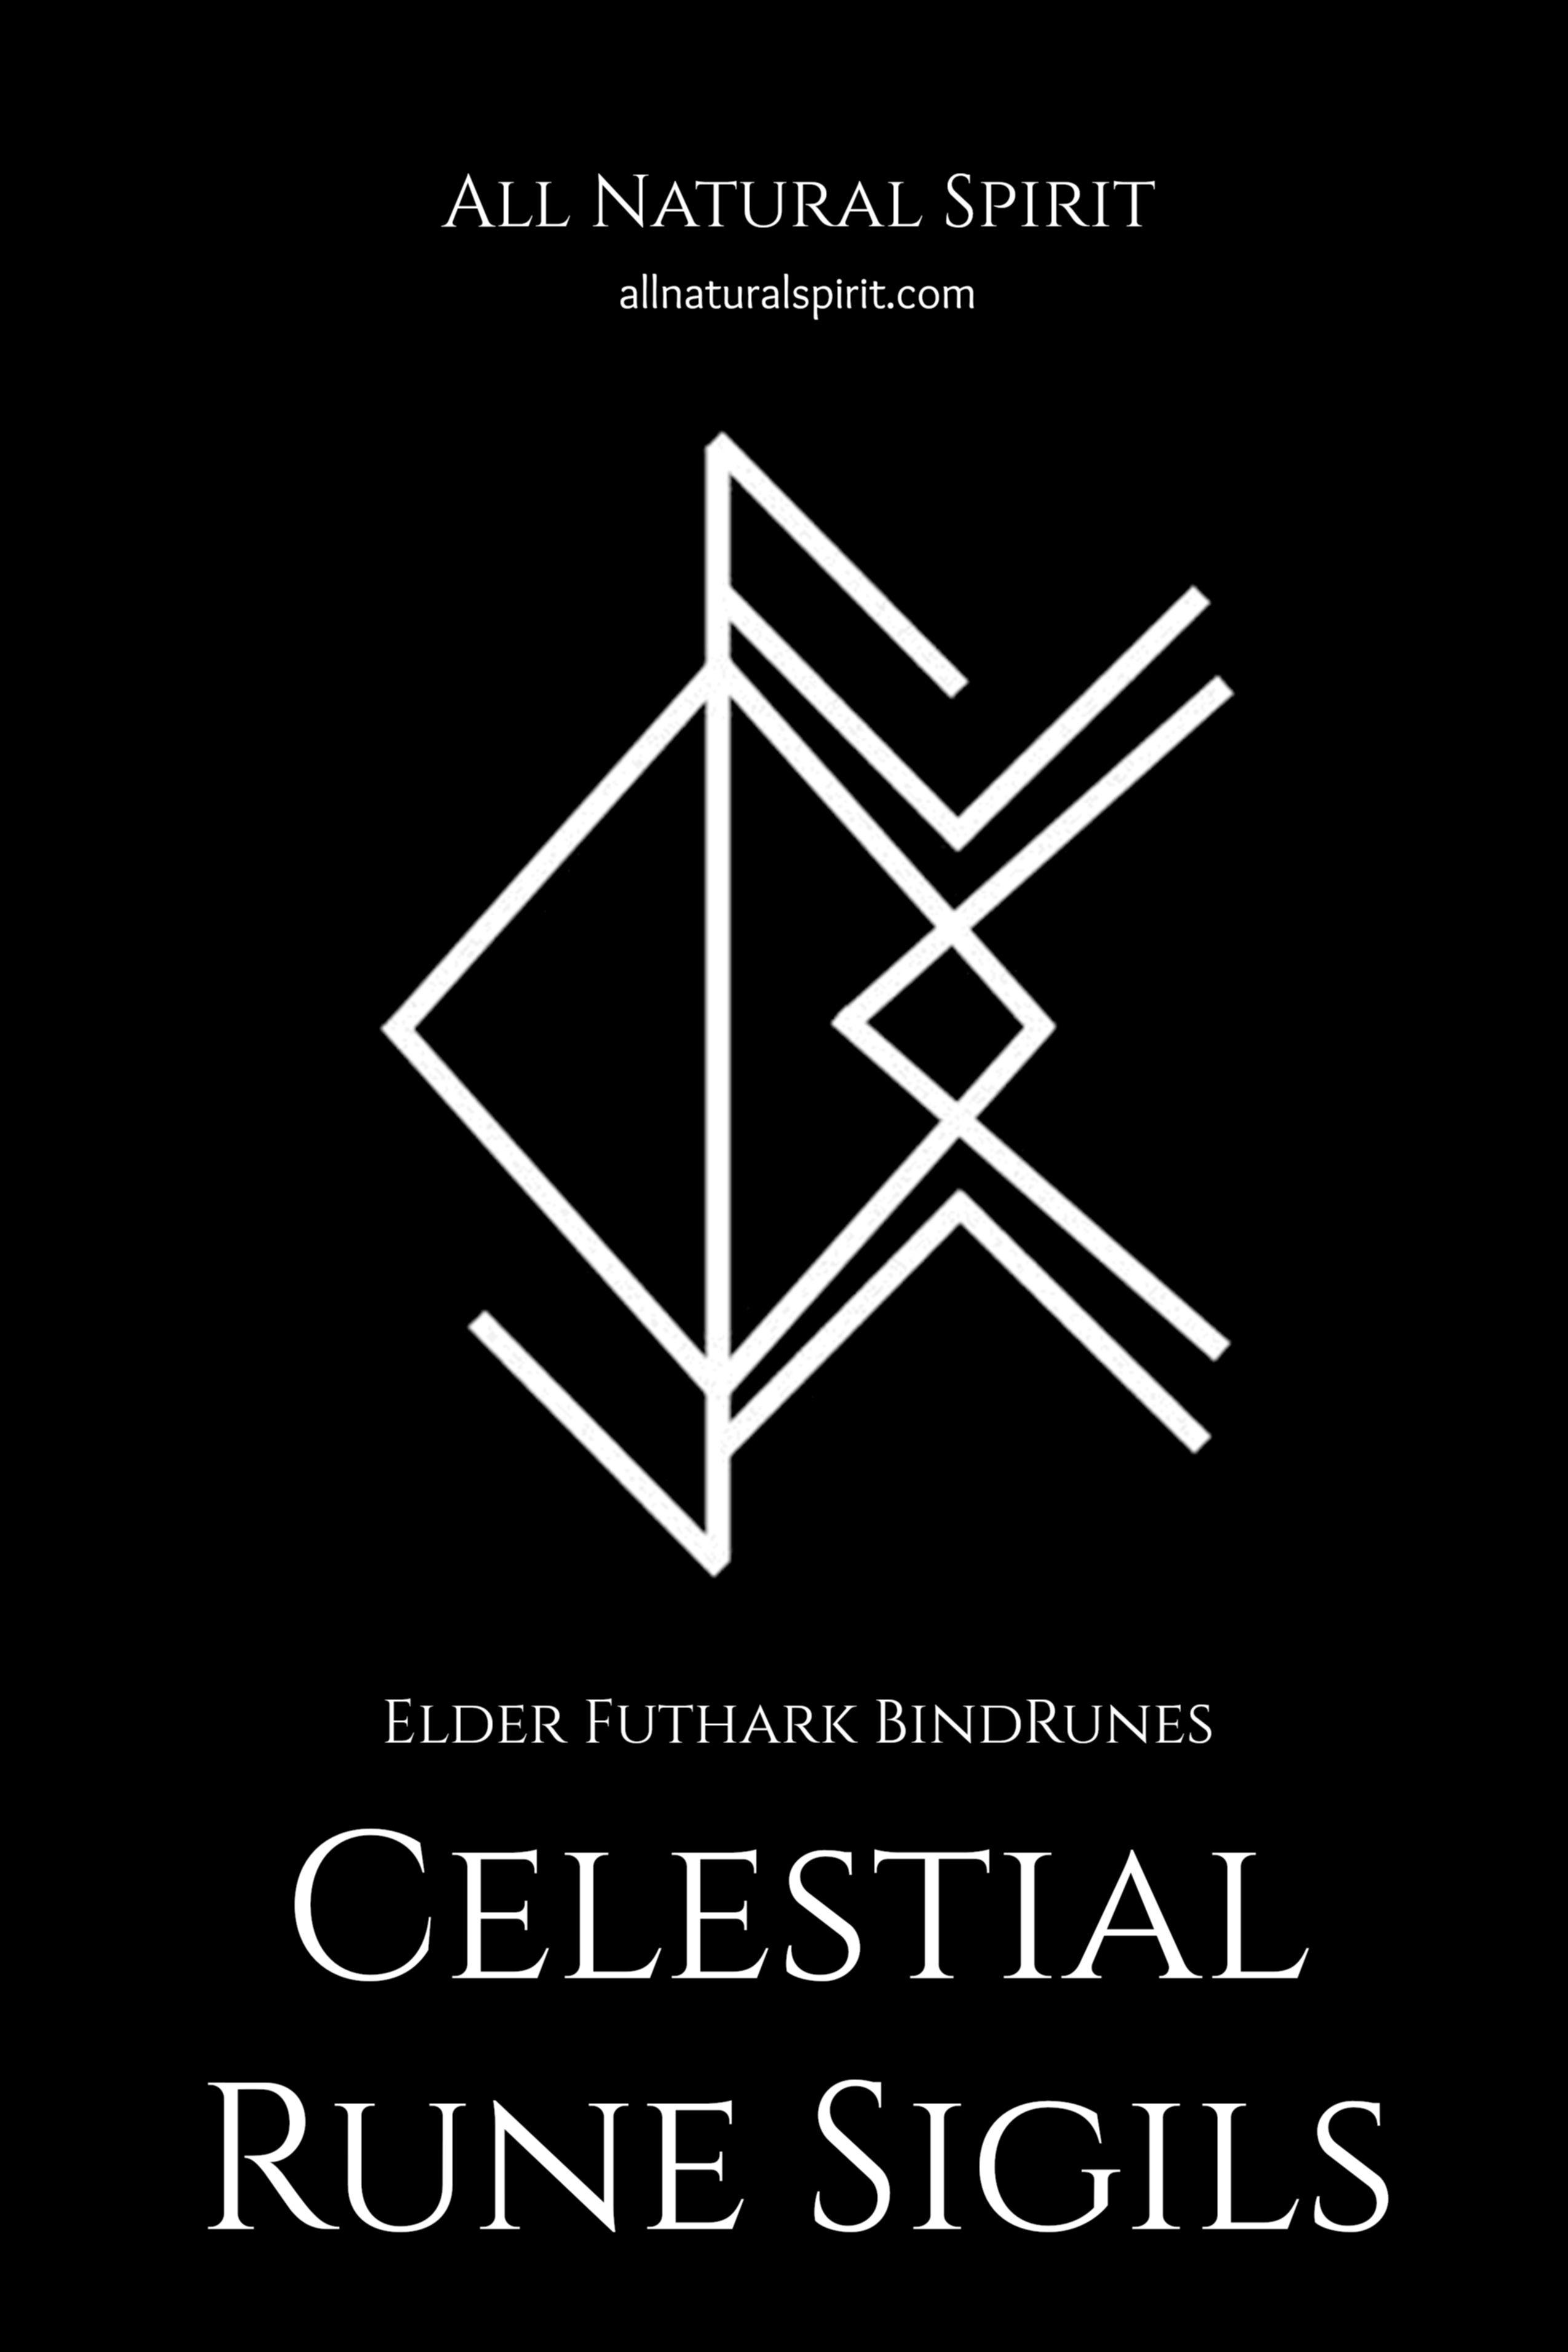 Celestial Rune Sigils, Elder Futhark, BindRunes, Kindle, All Natural Spirit, ebook, paperback, celestial rune sigils